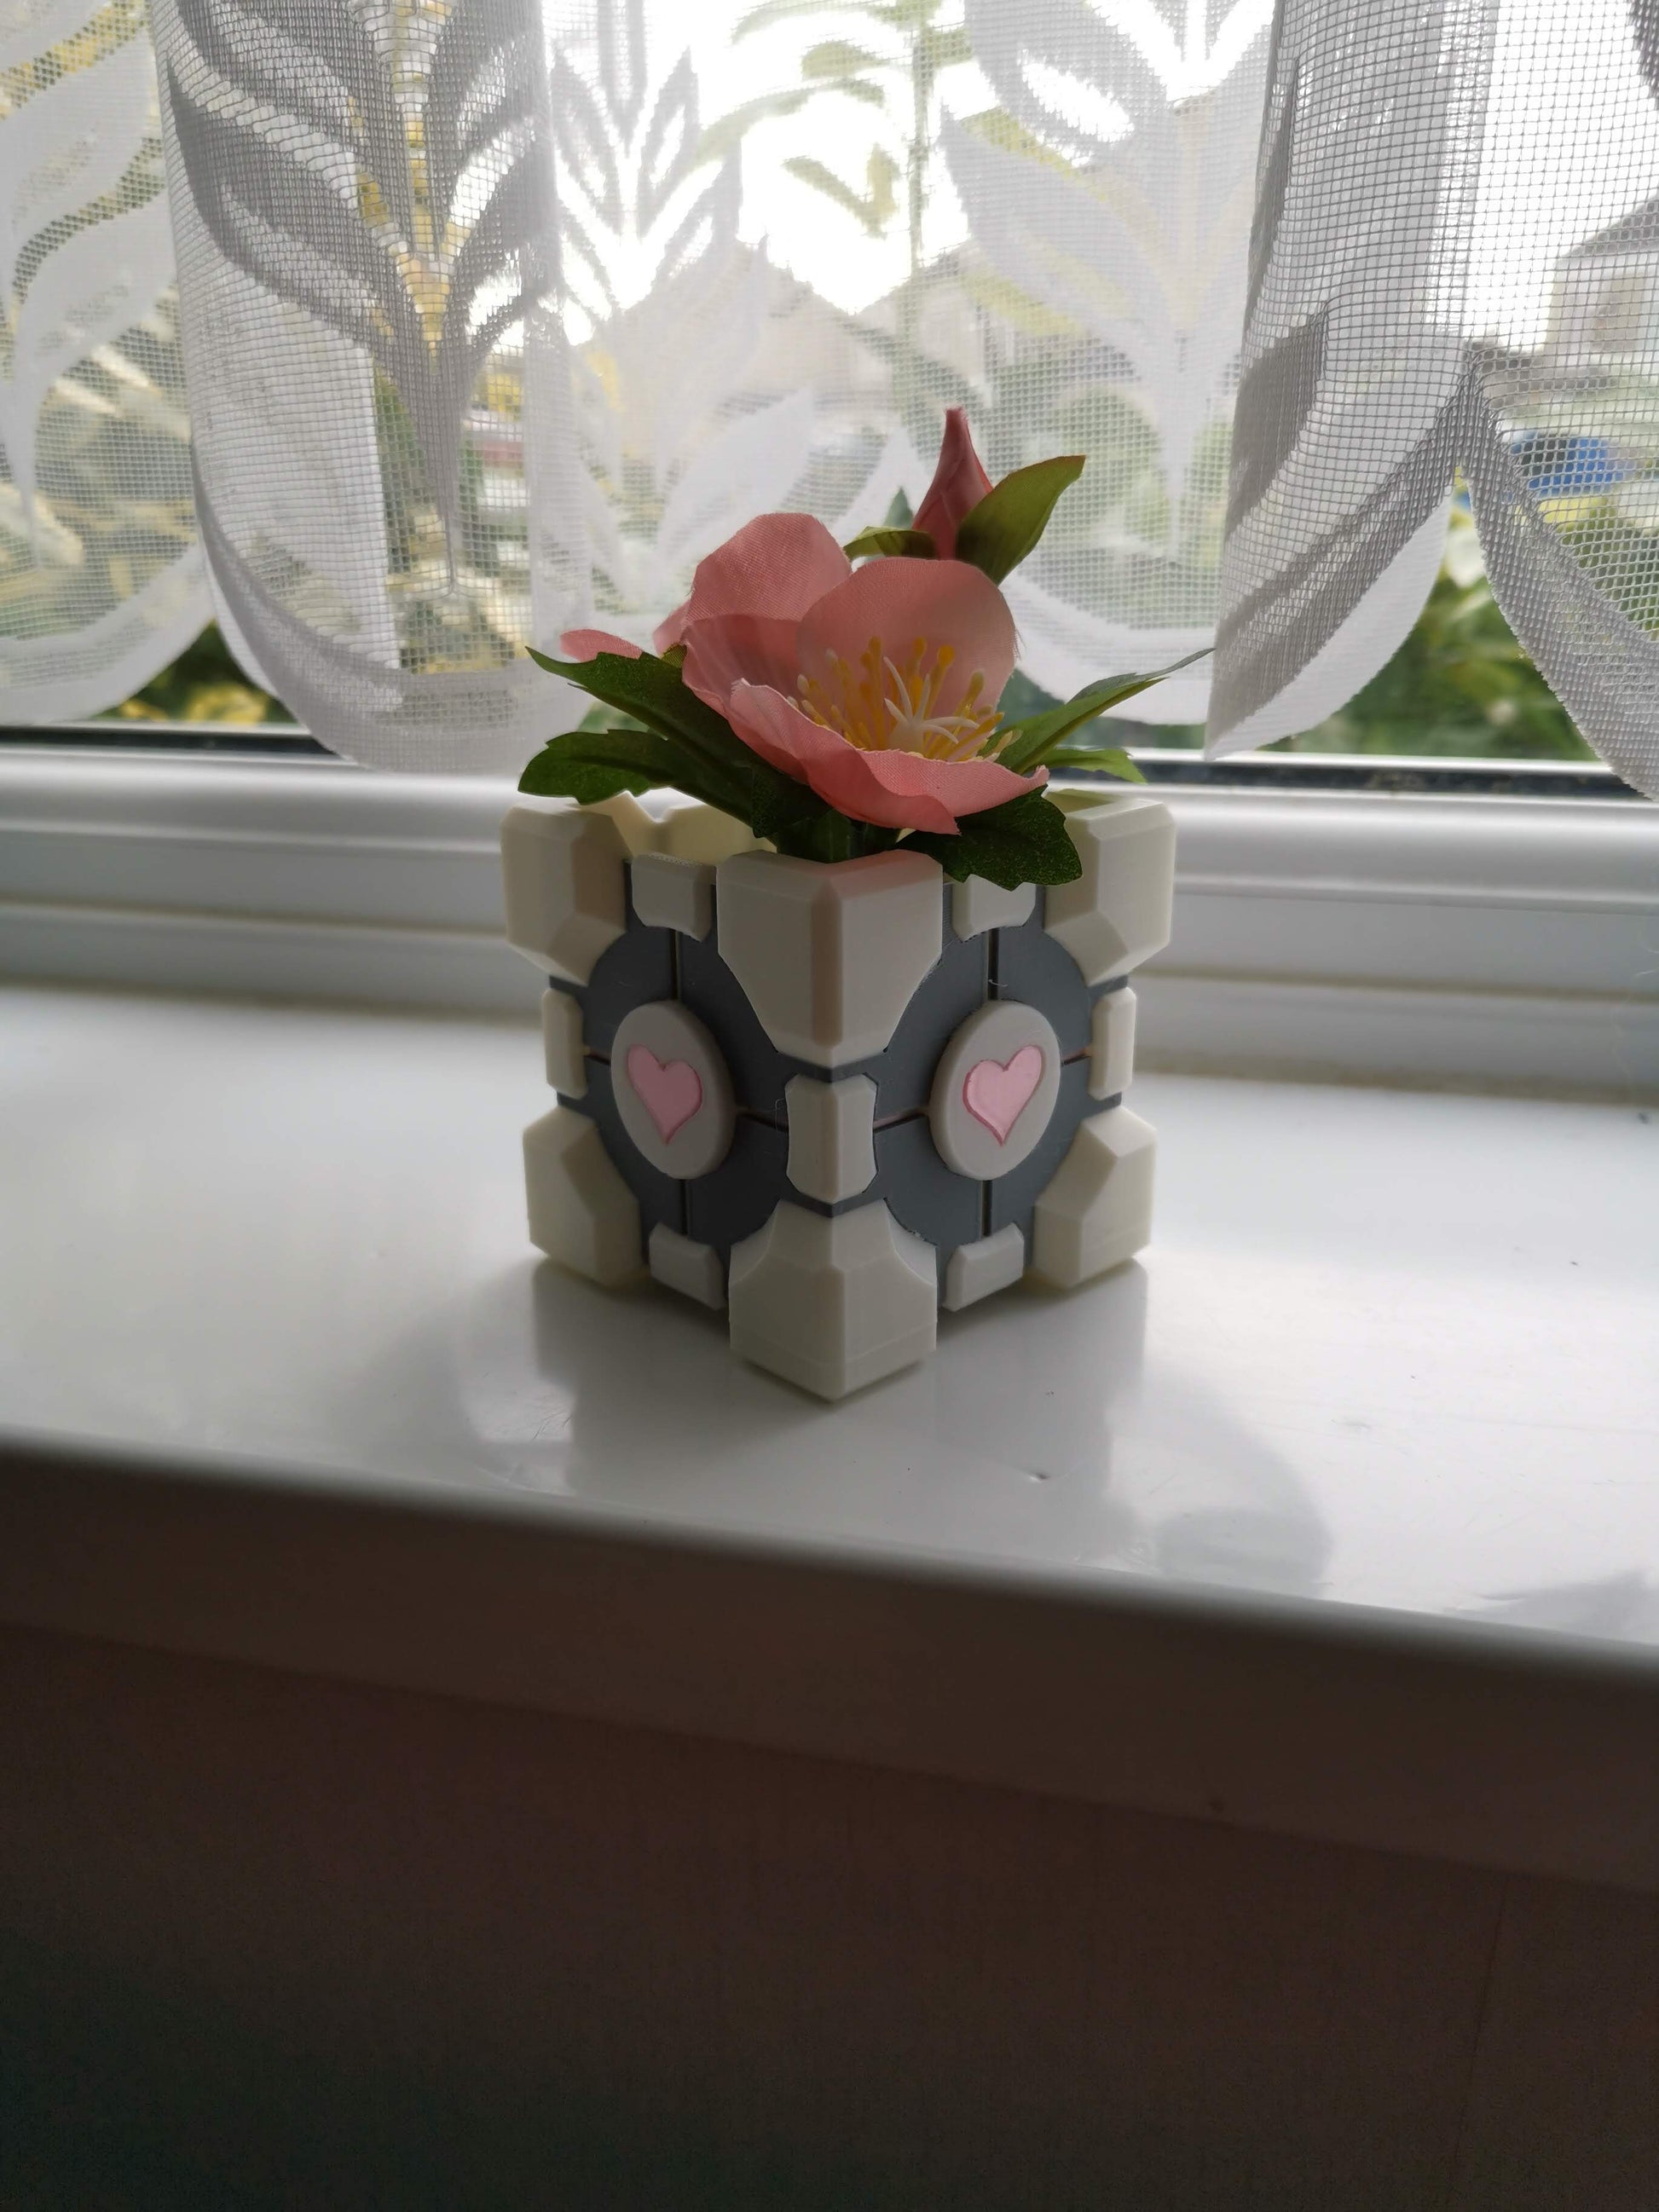 Companion Cube Portal planter on windowsill with plant